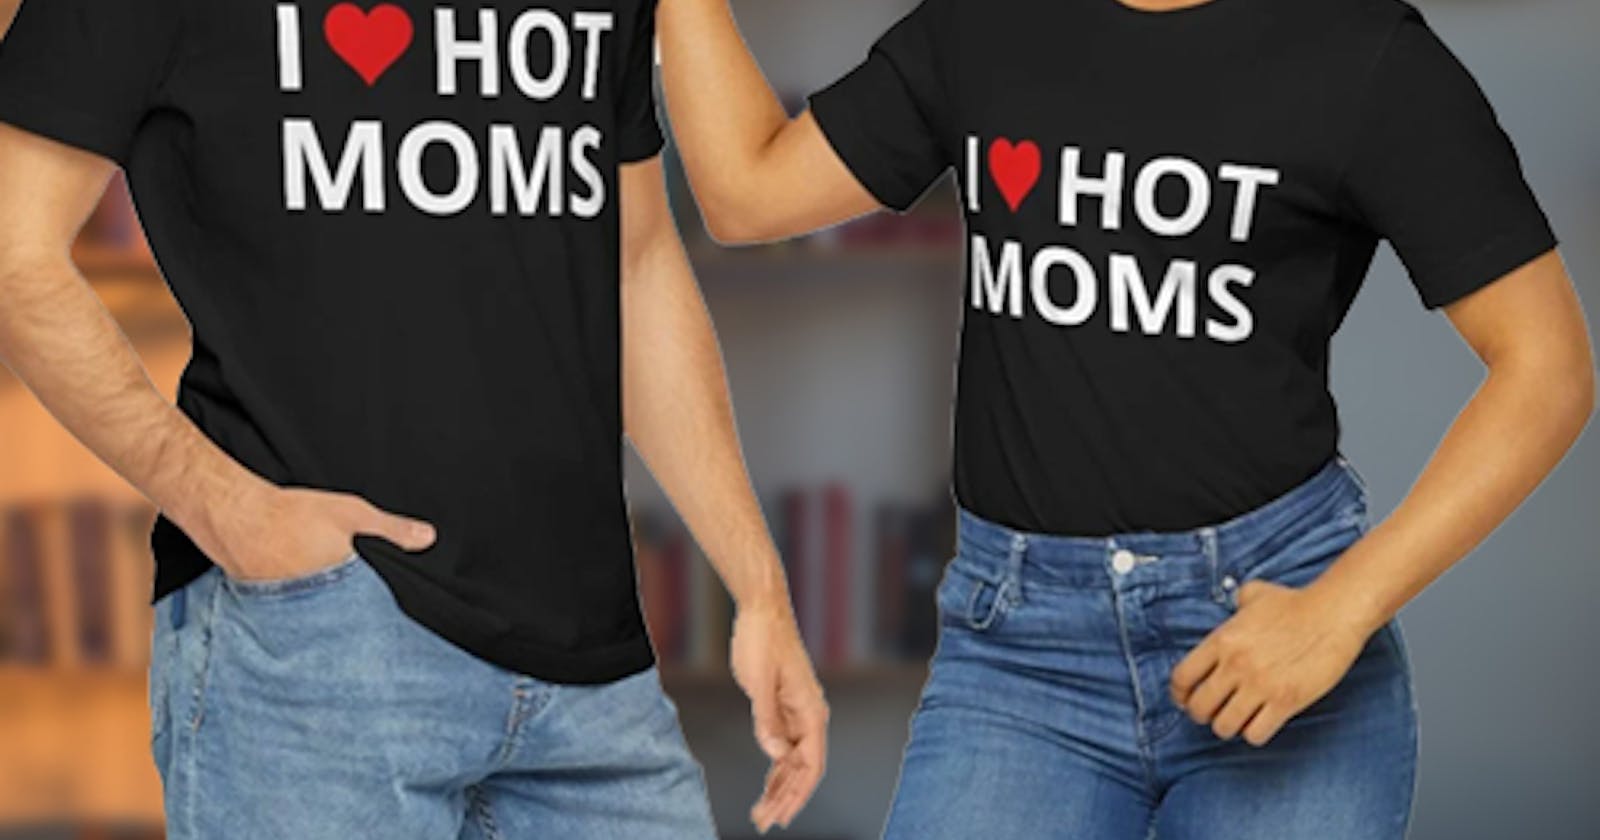 HOT Mom Shirts StirTshirt